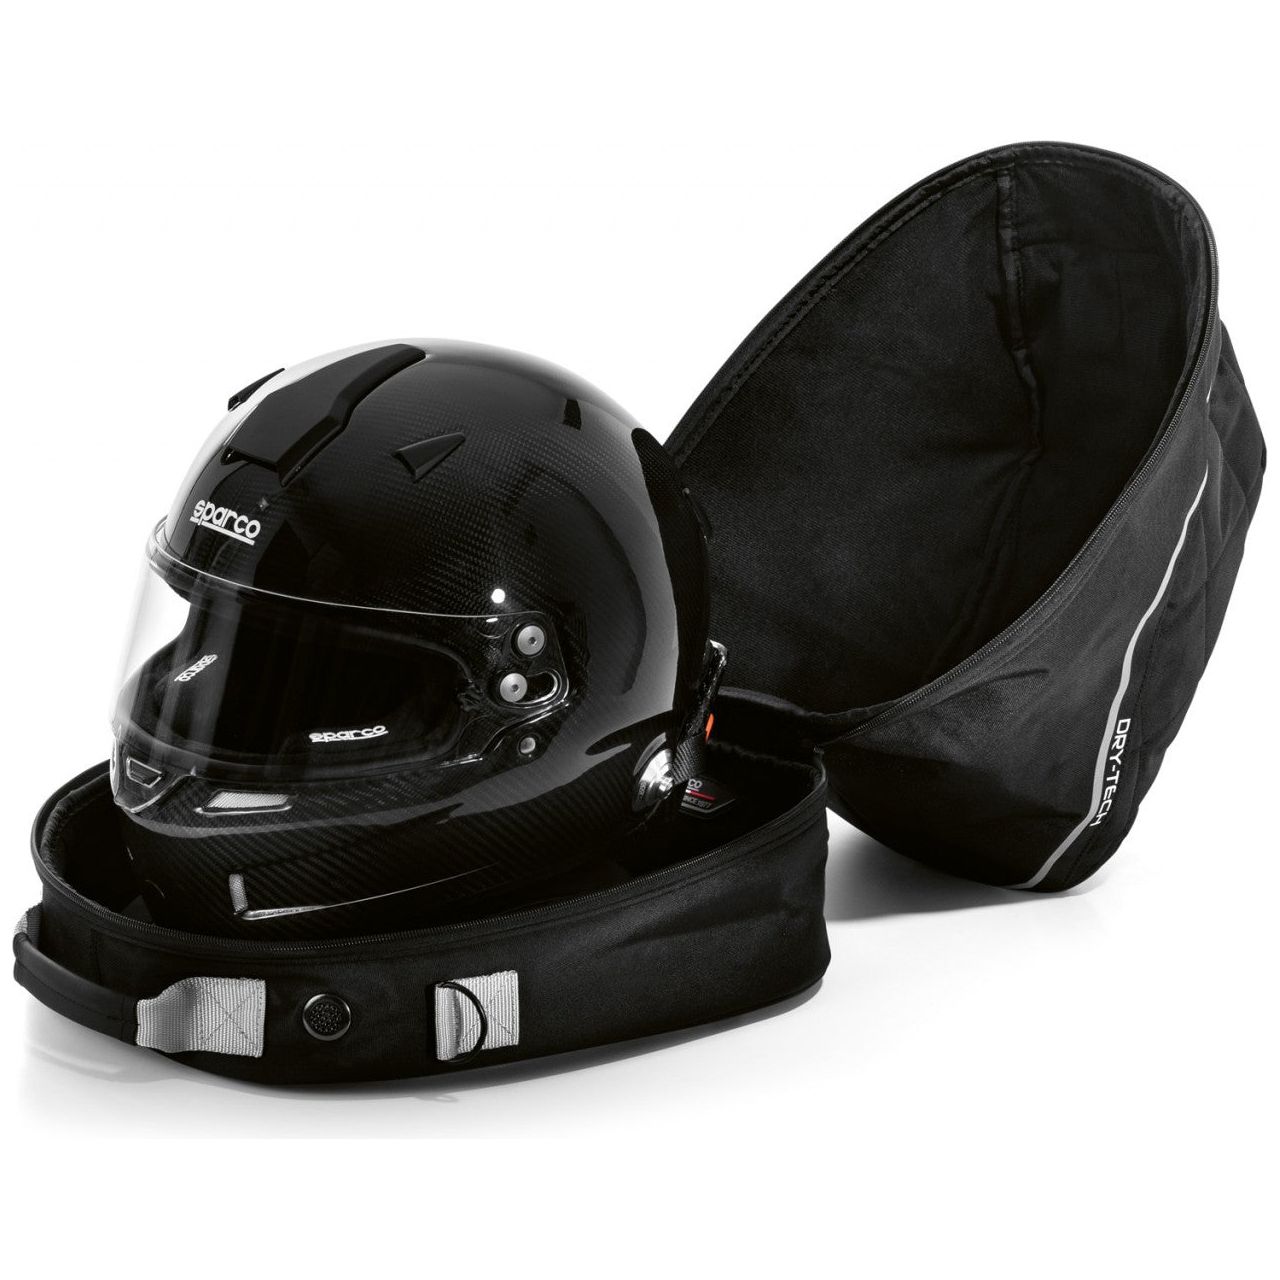 Sparco helmet bag Dry Tech